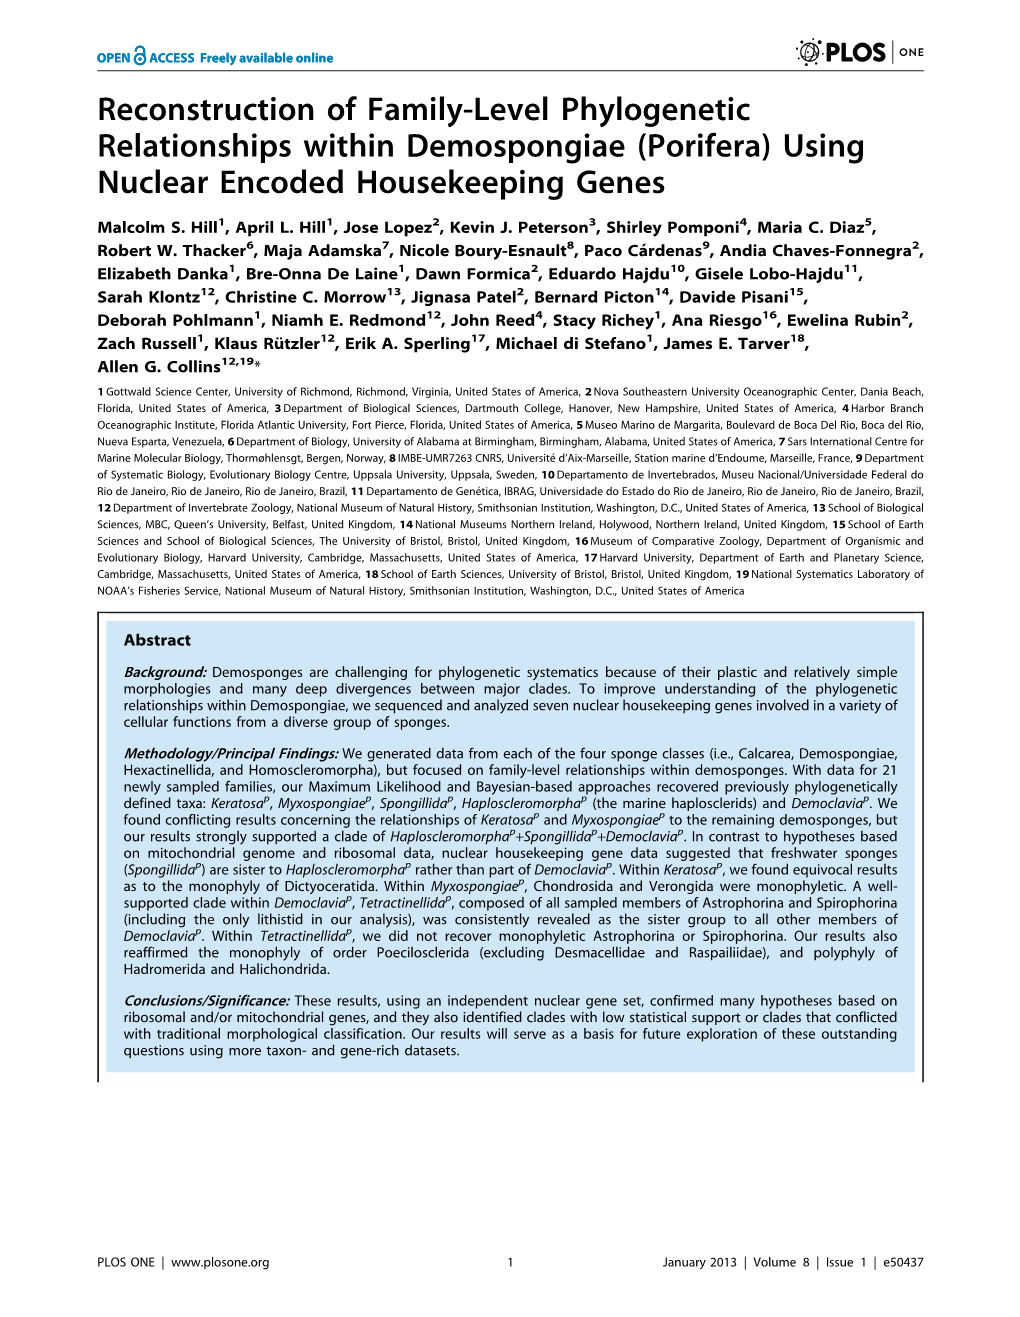 Porifera) Using Nuclear Encoded Housekeeping Genes